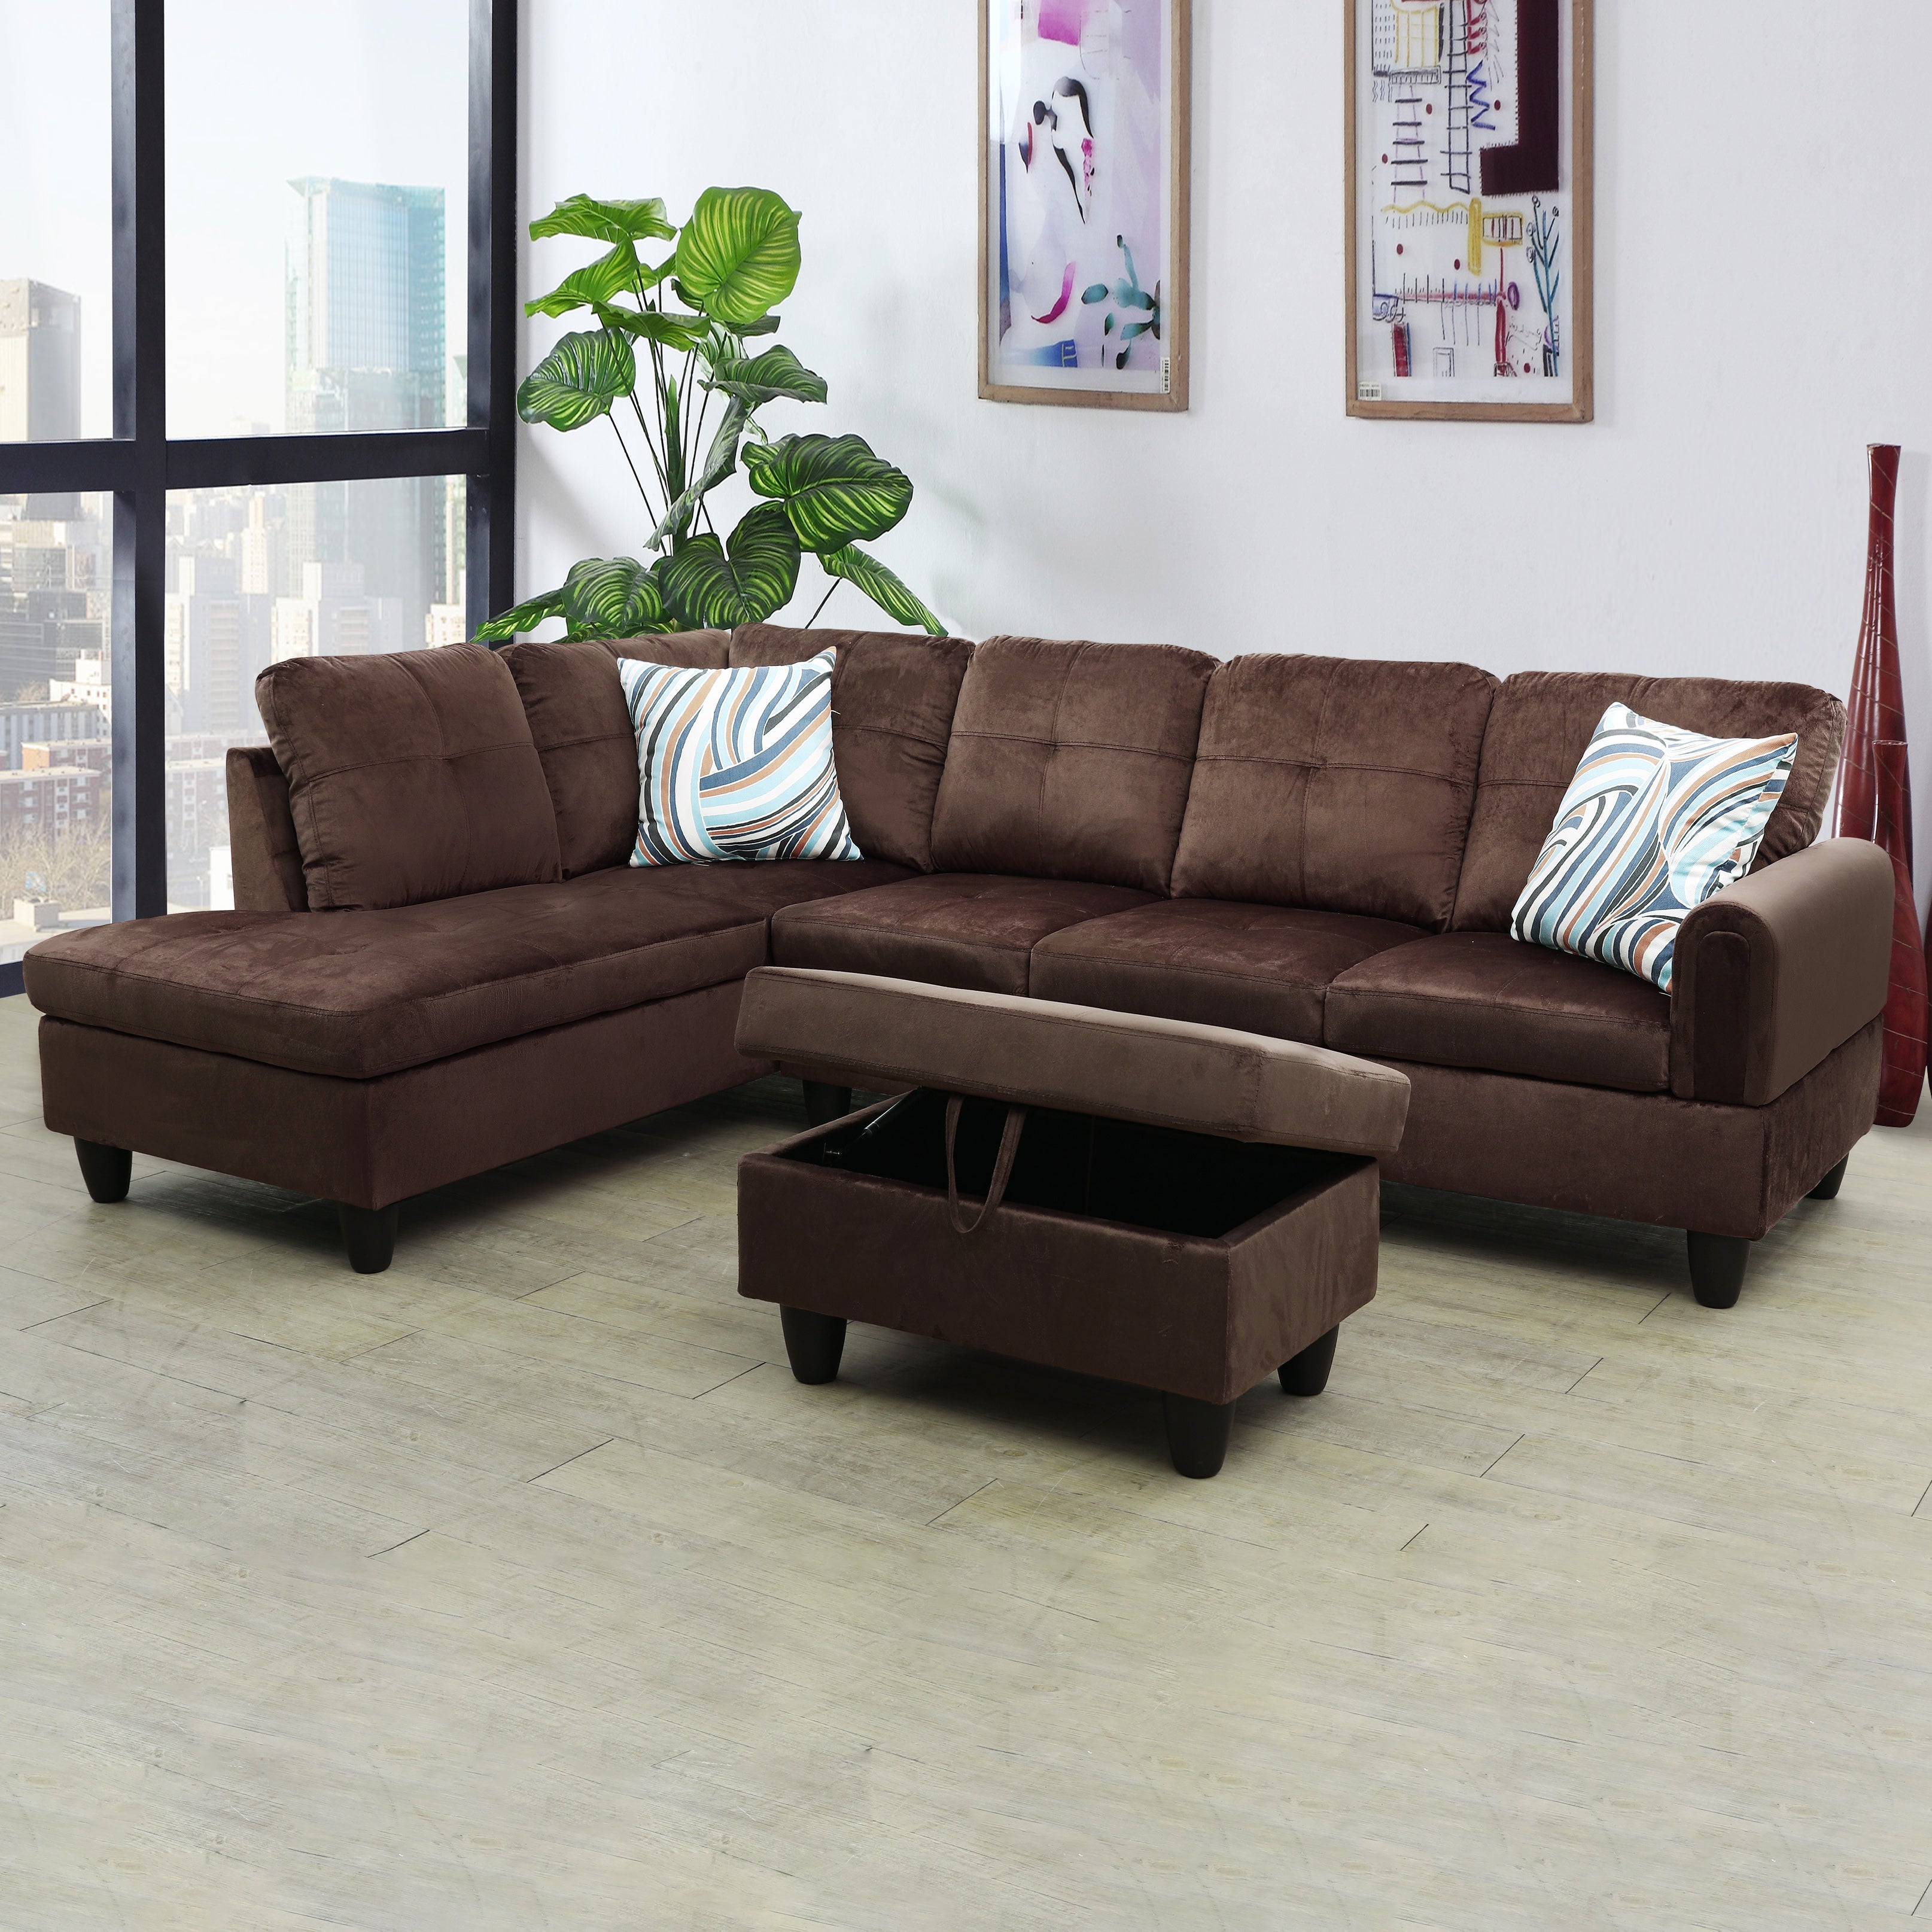 Ainehome Chocolate L-shaped Flannel Sofa Set